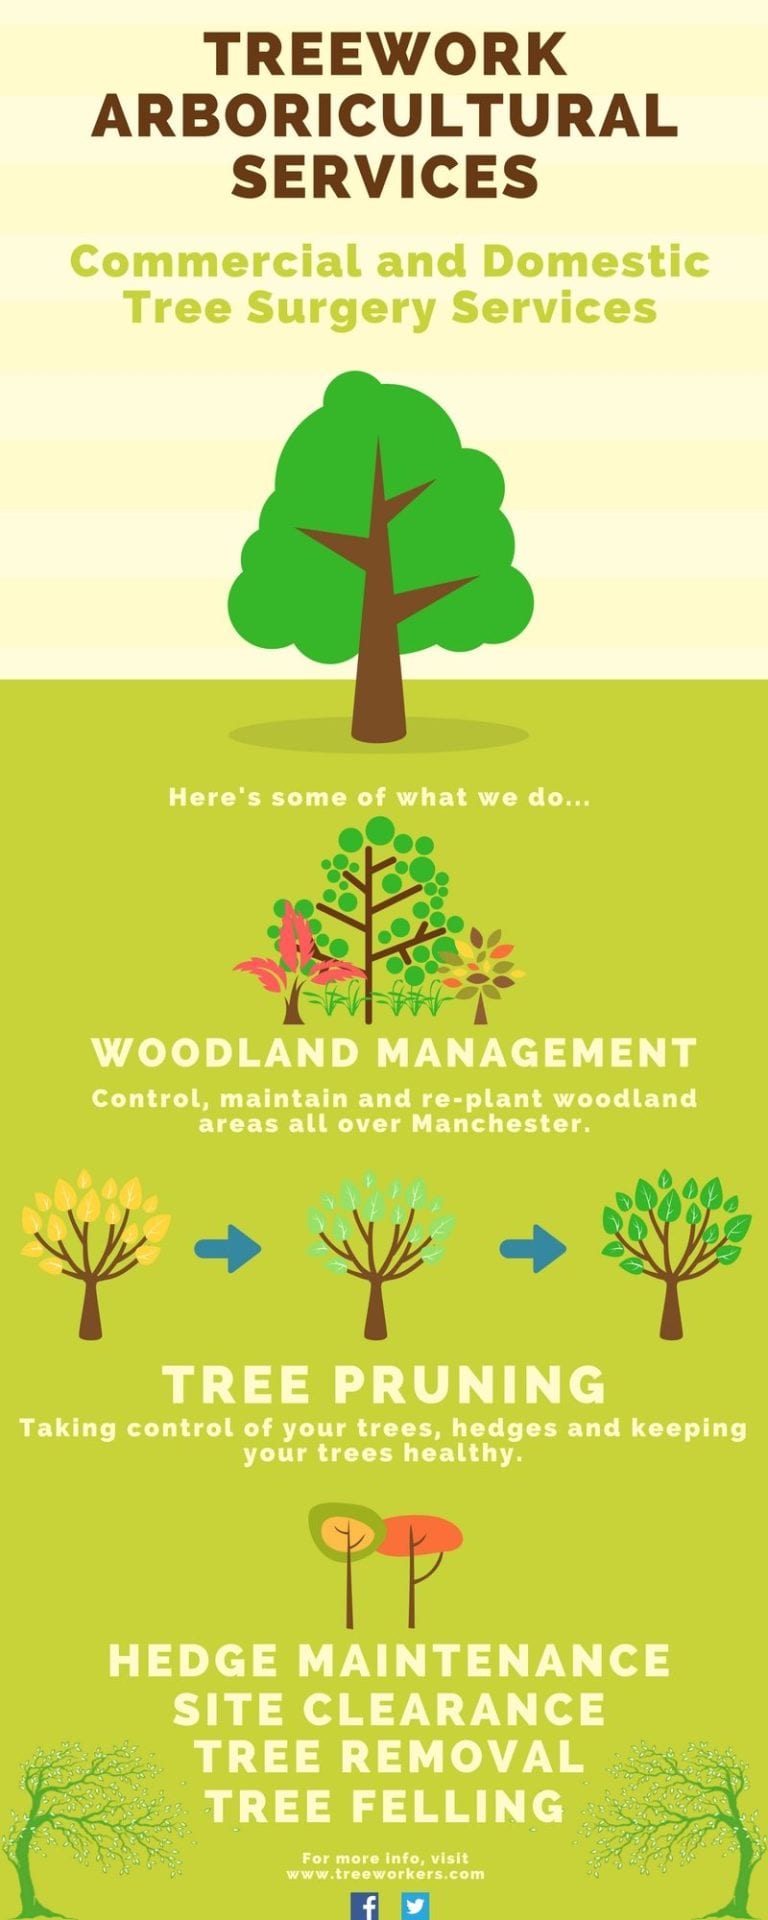 Treework Arboricultural Services Leaflet